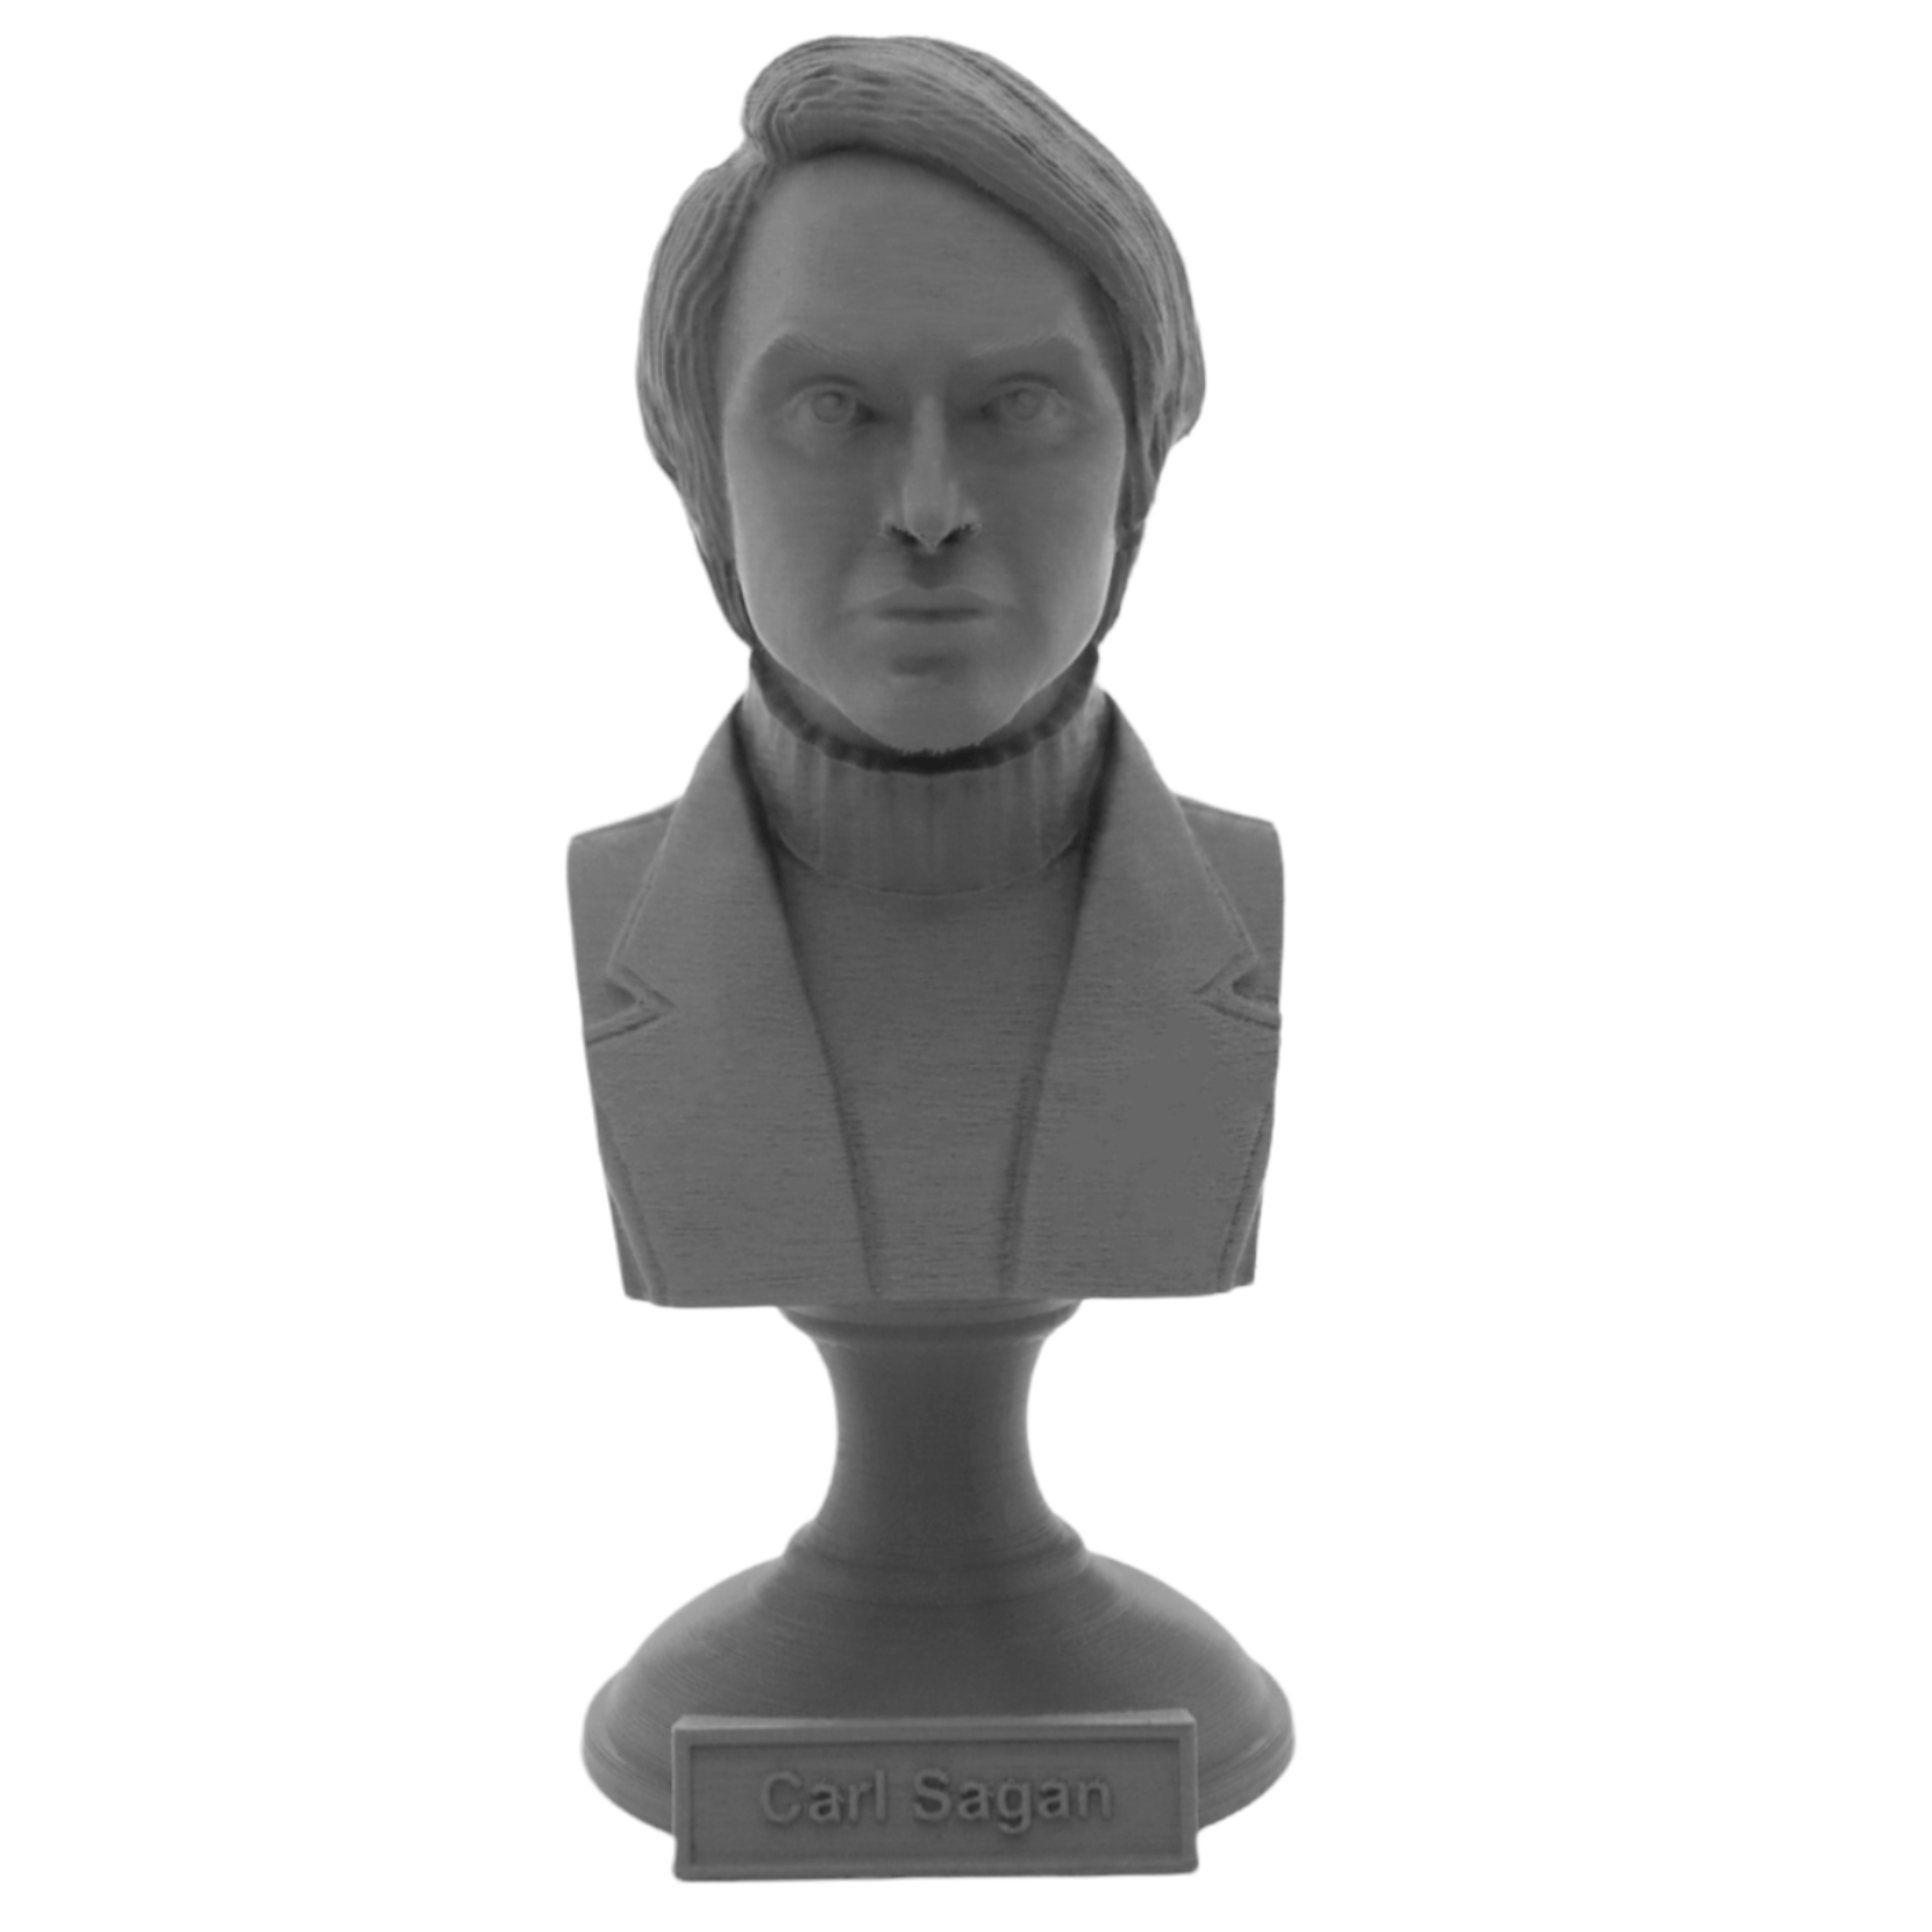 Carl Sagan Famous American Astronomer Sculpture Bust on Pedestal